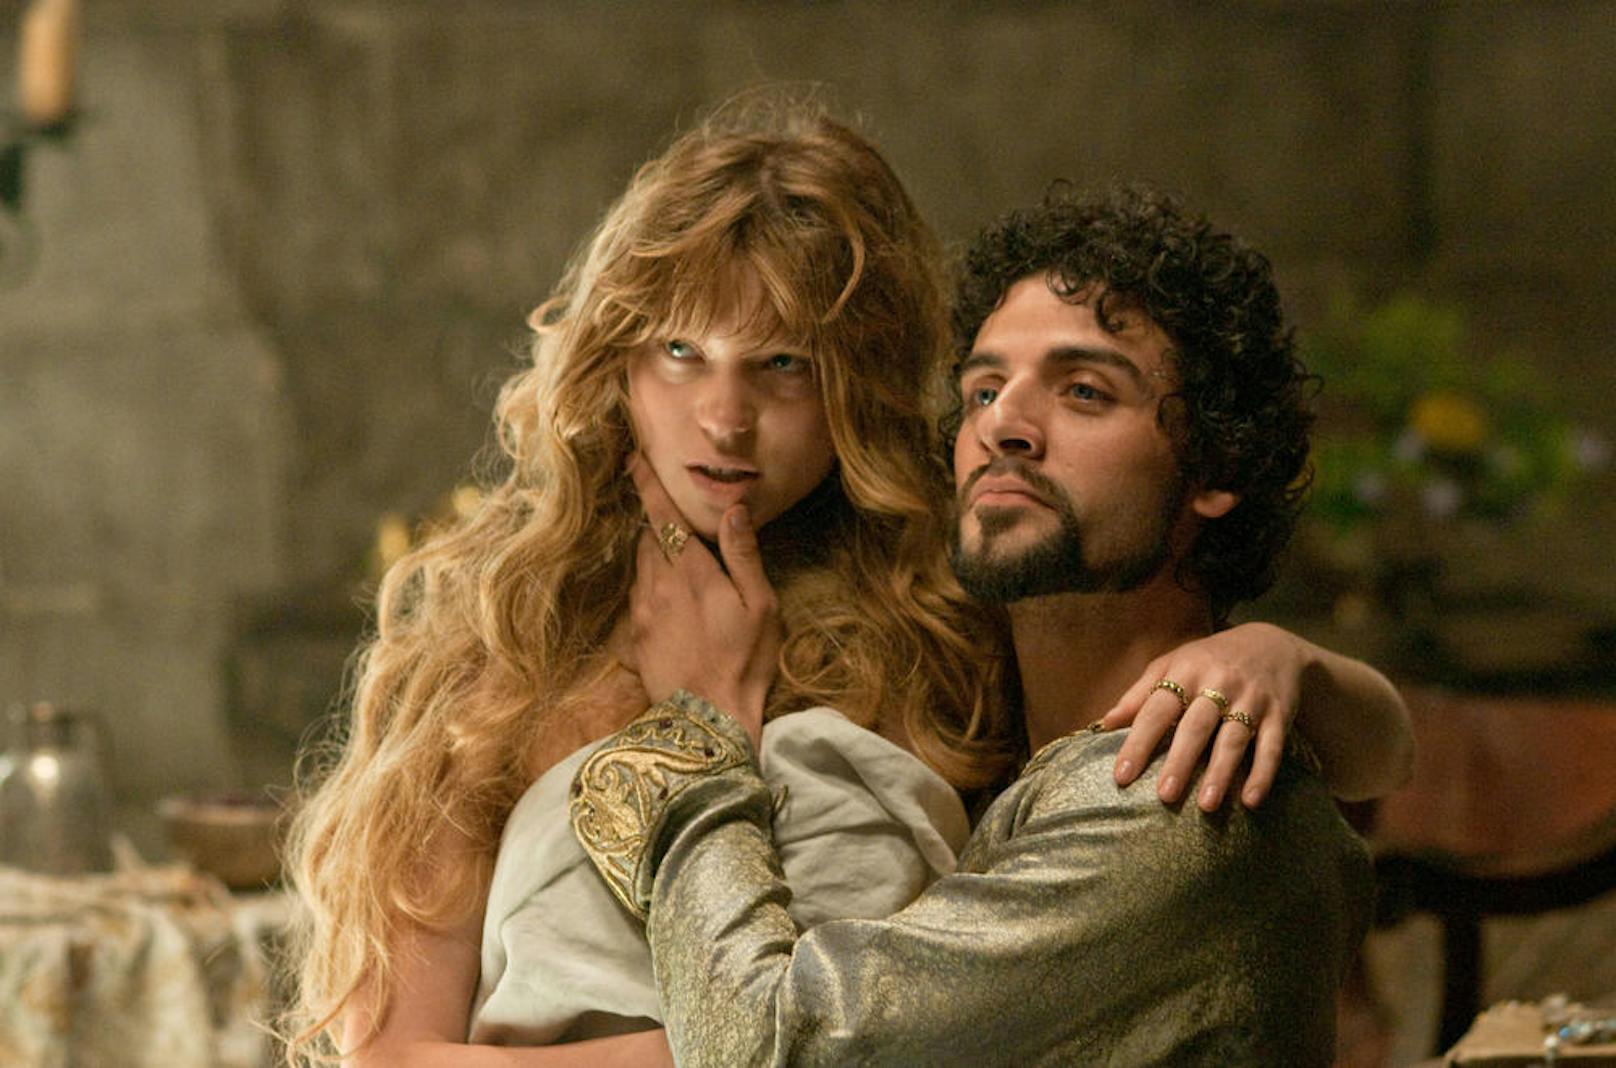 Léa Seydoux und Oscar Isaac in "Robin Hood" (2010)